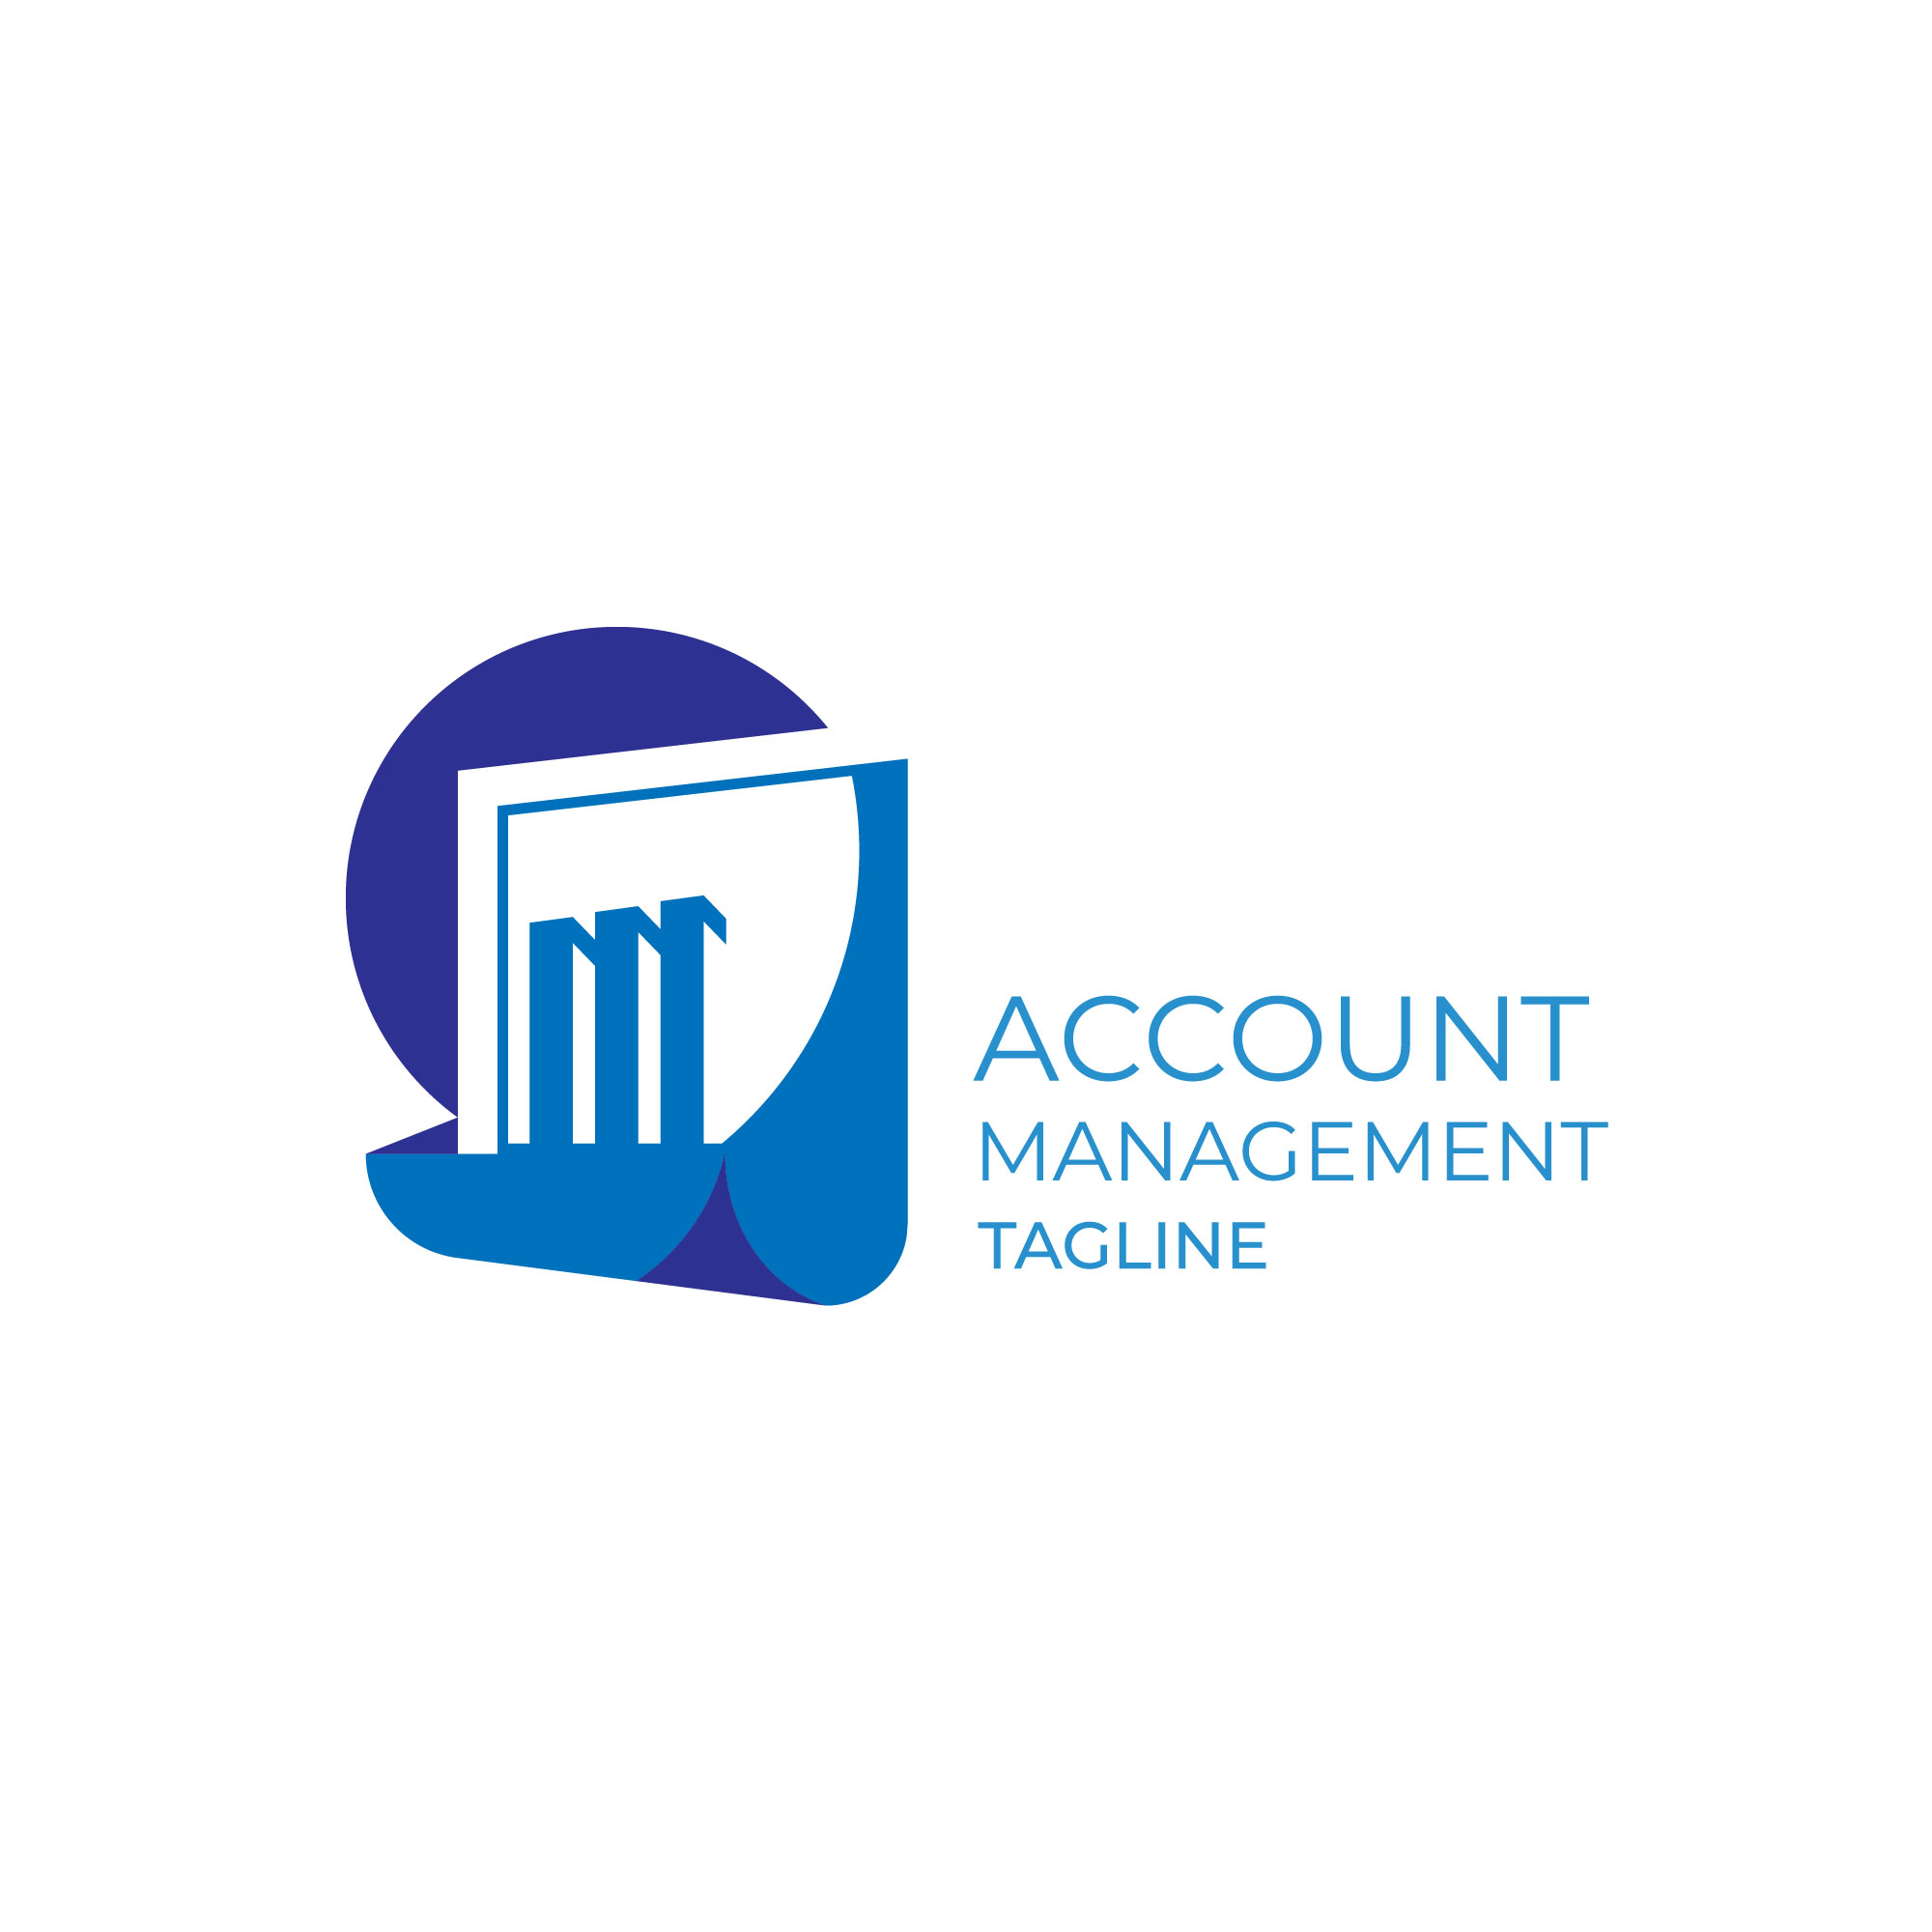 Account management company logo